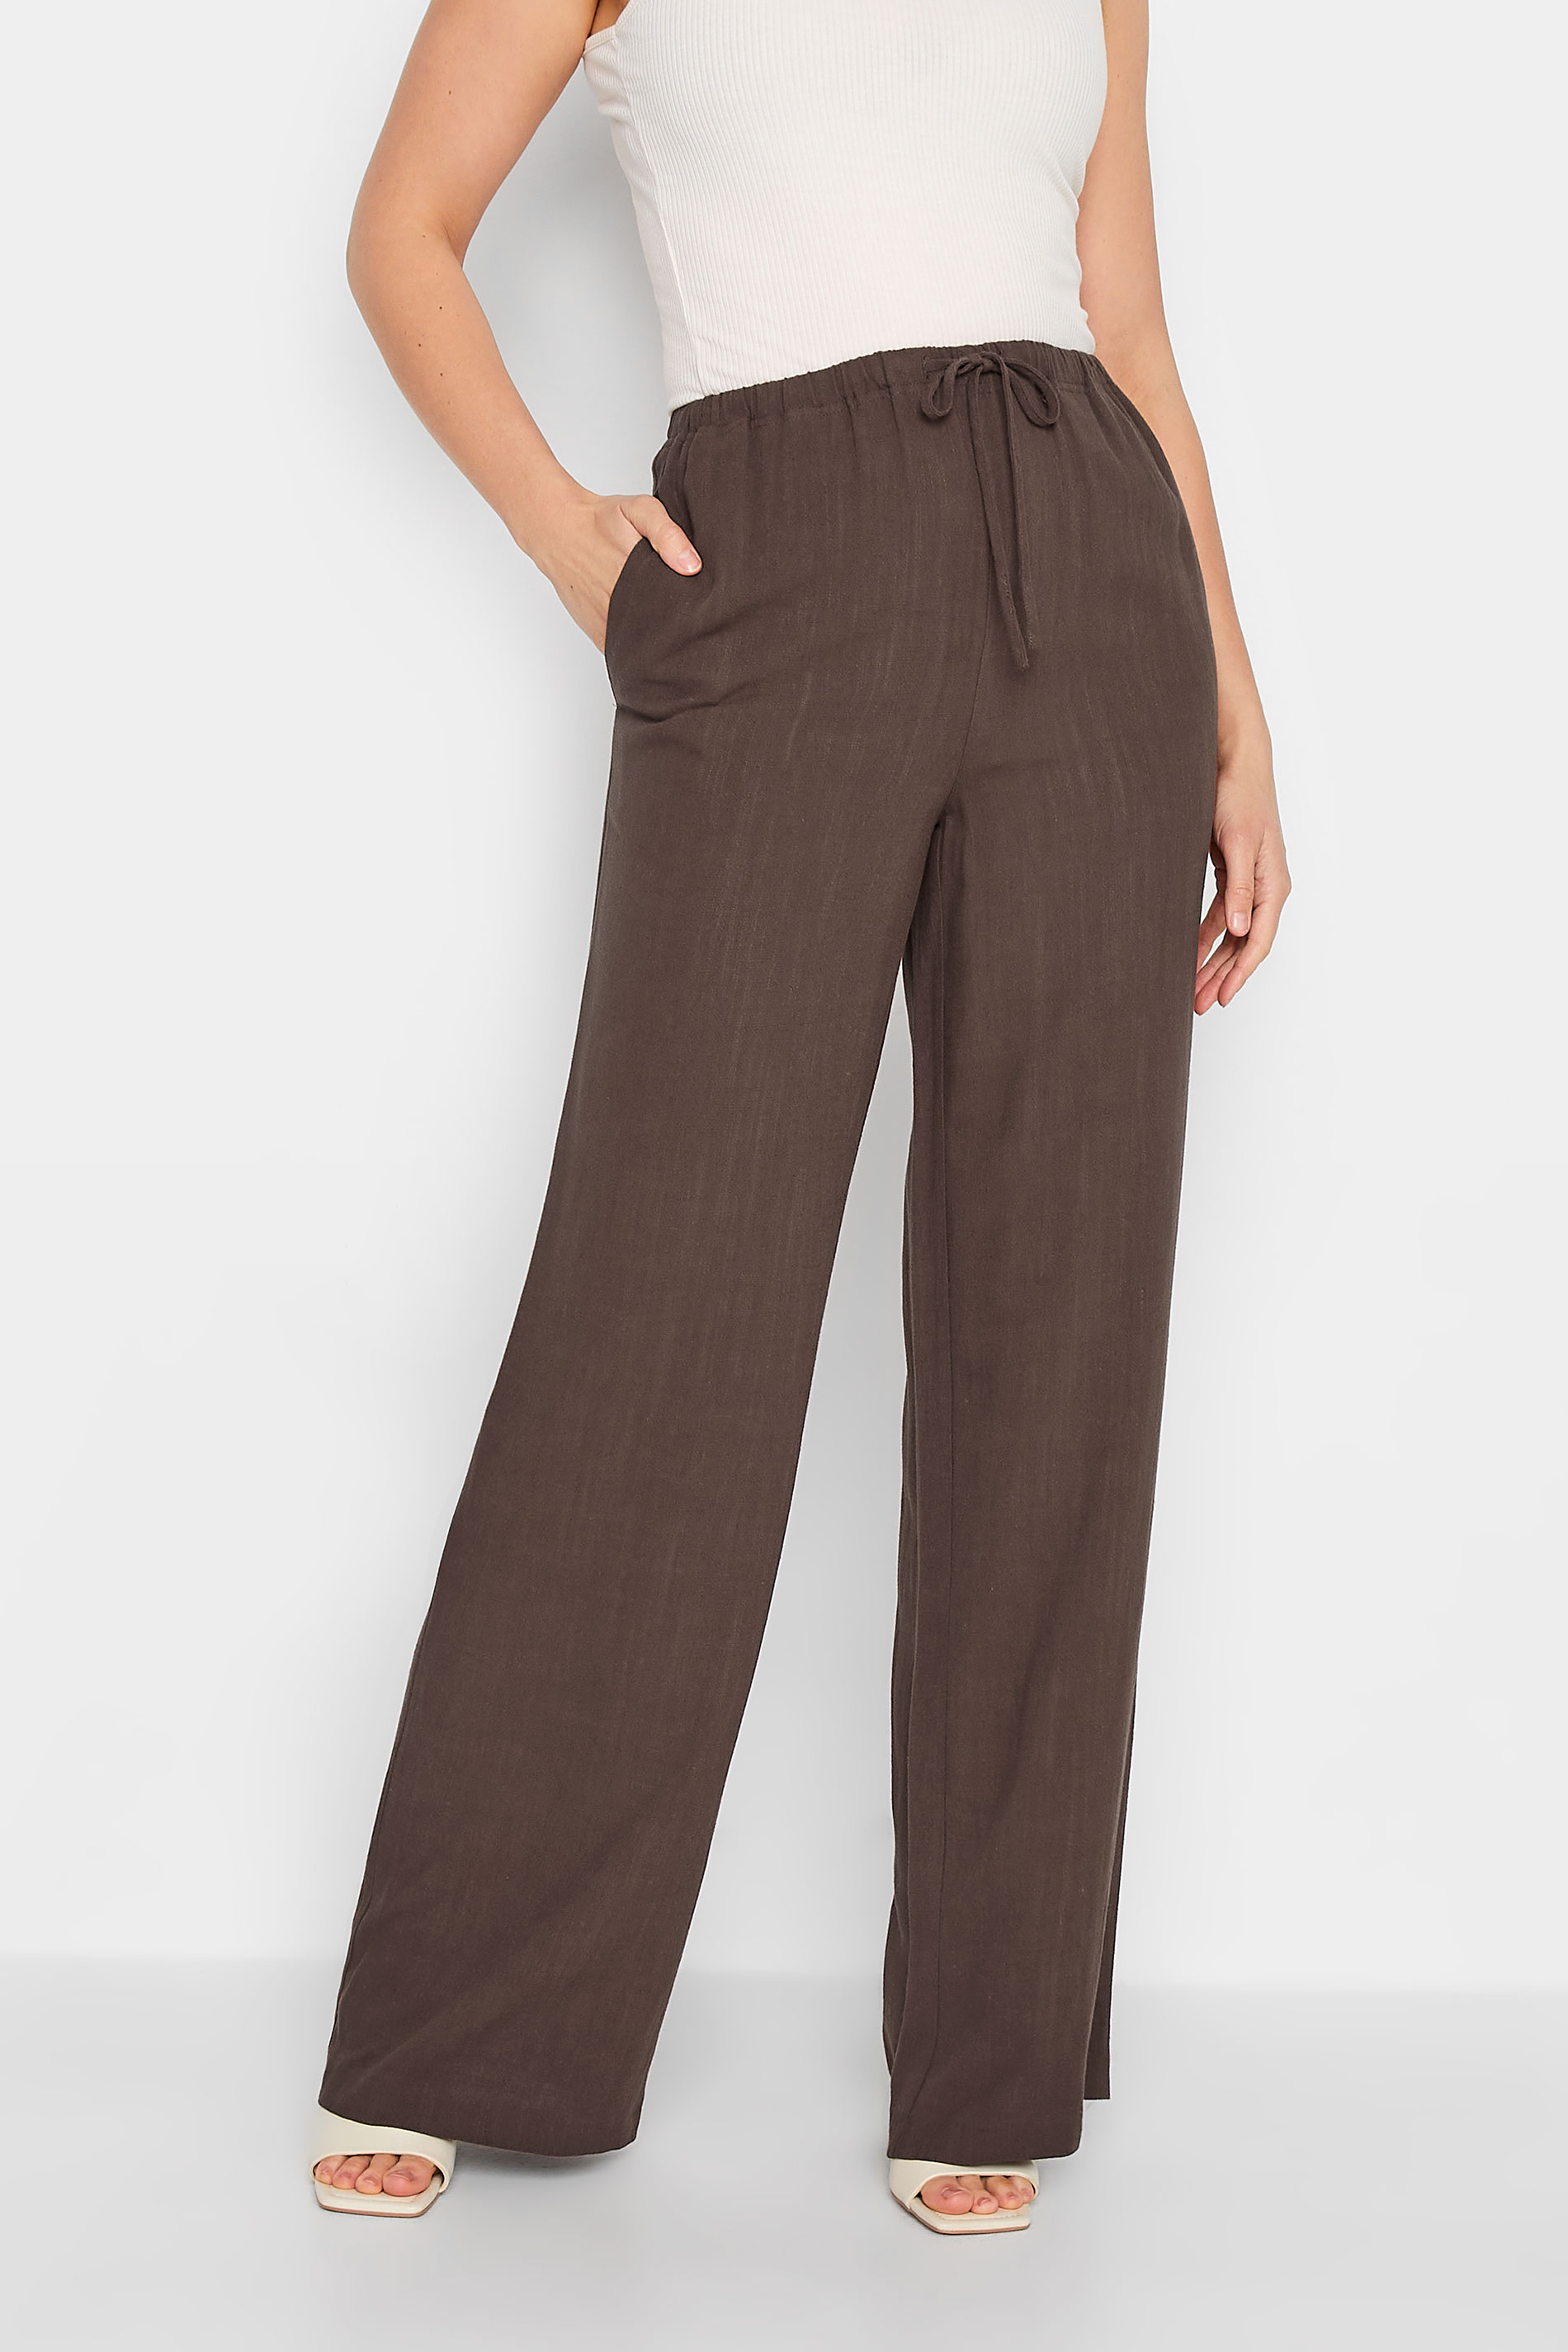 LTS Tall Women's Chocolate Brown Wide Leg Linen Look Trousers | Long Tall Sally 1